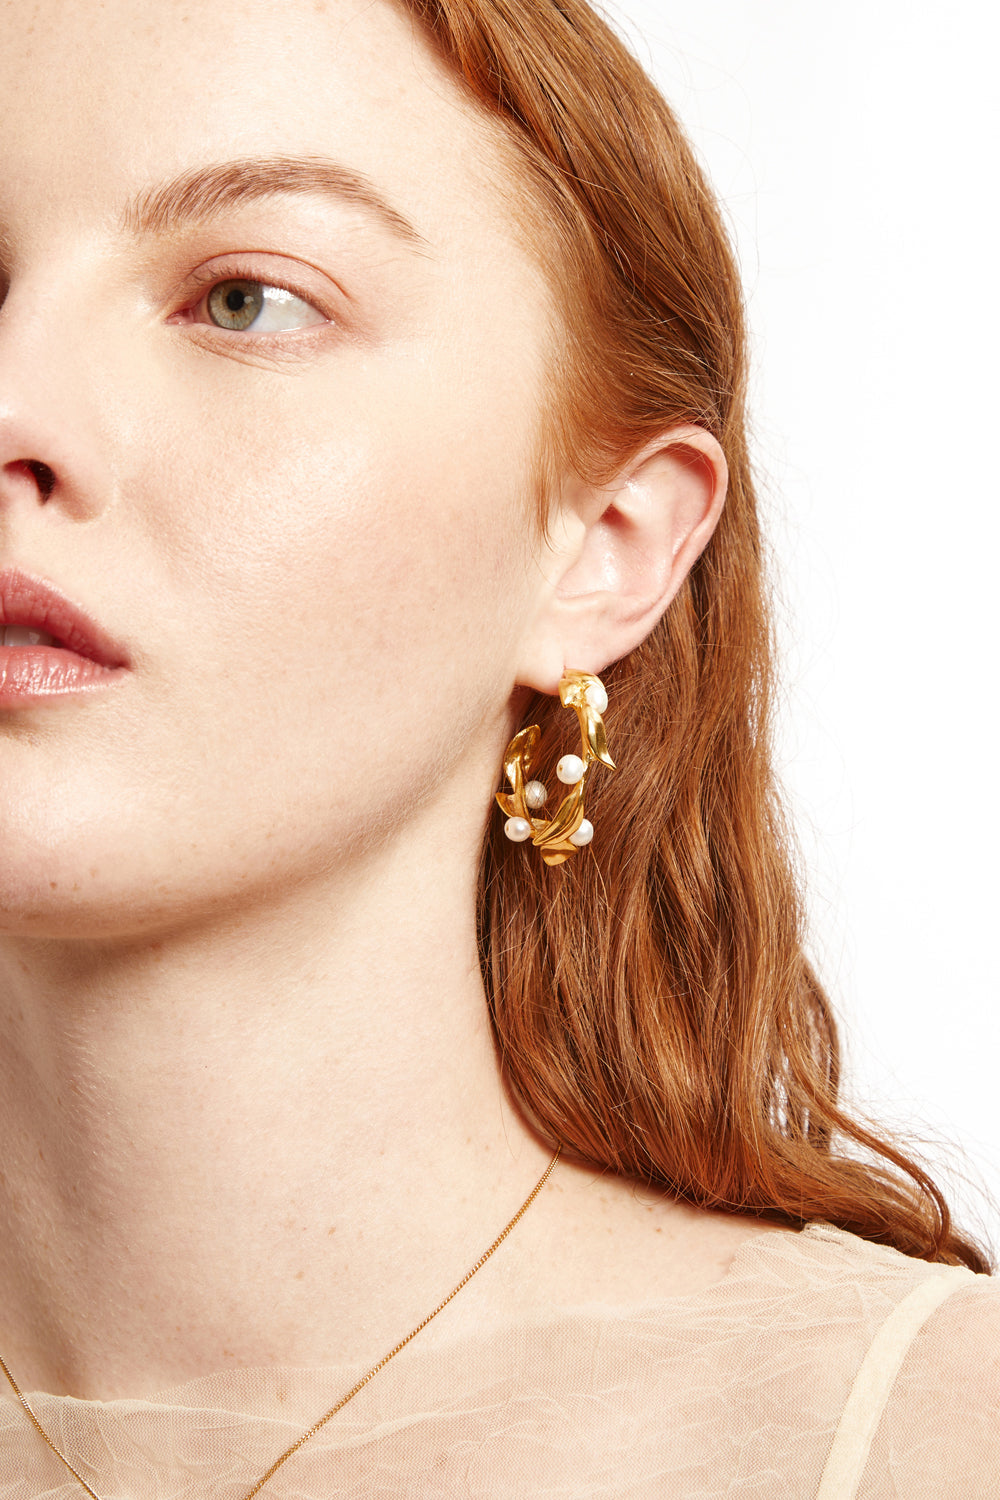 Olive Branch Hoop Earrings - Maxi Gold